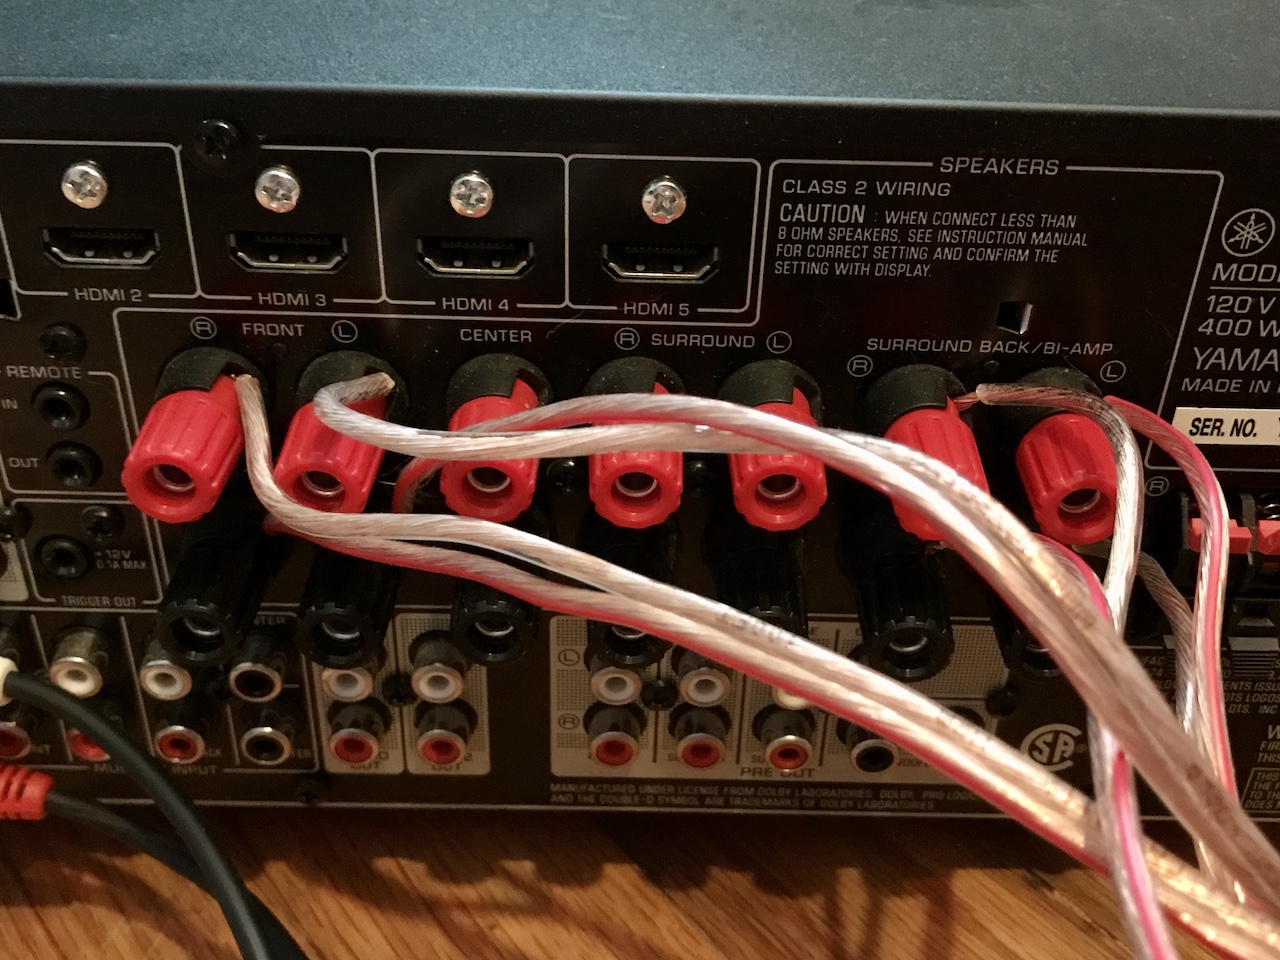 3 speaker wiring.jpg